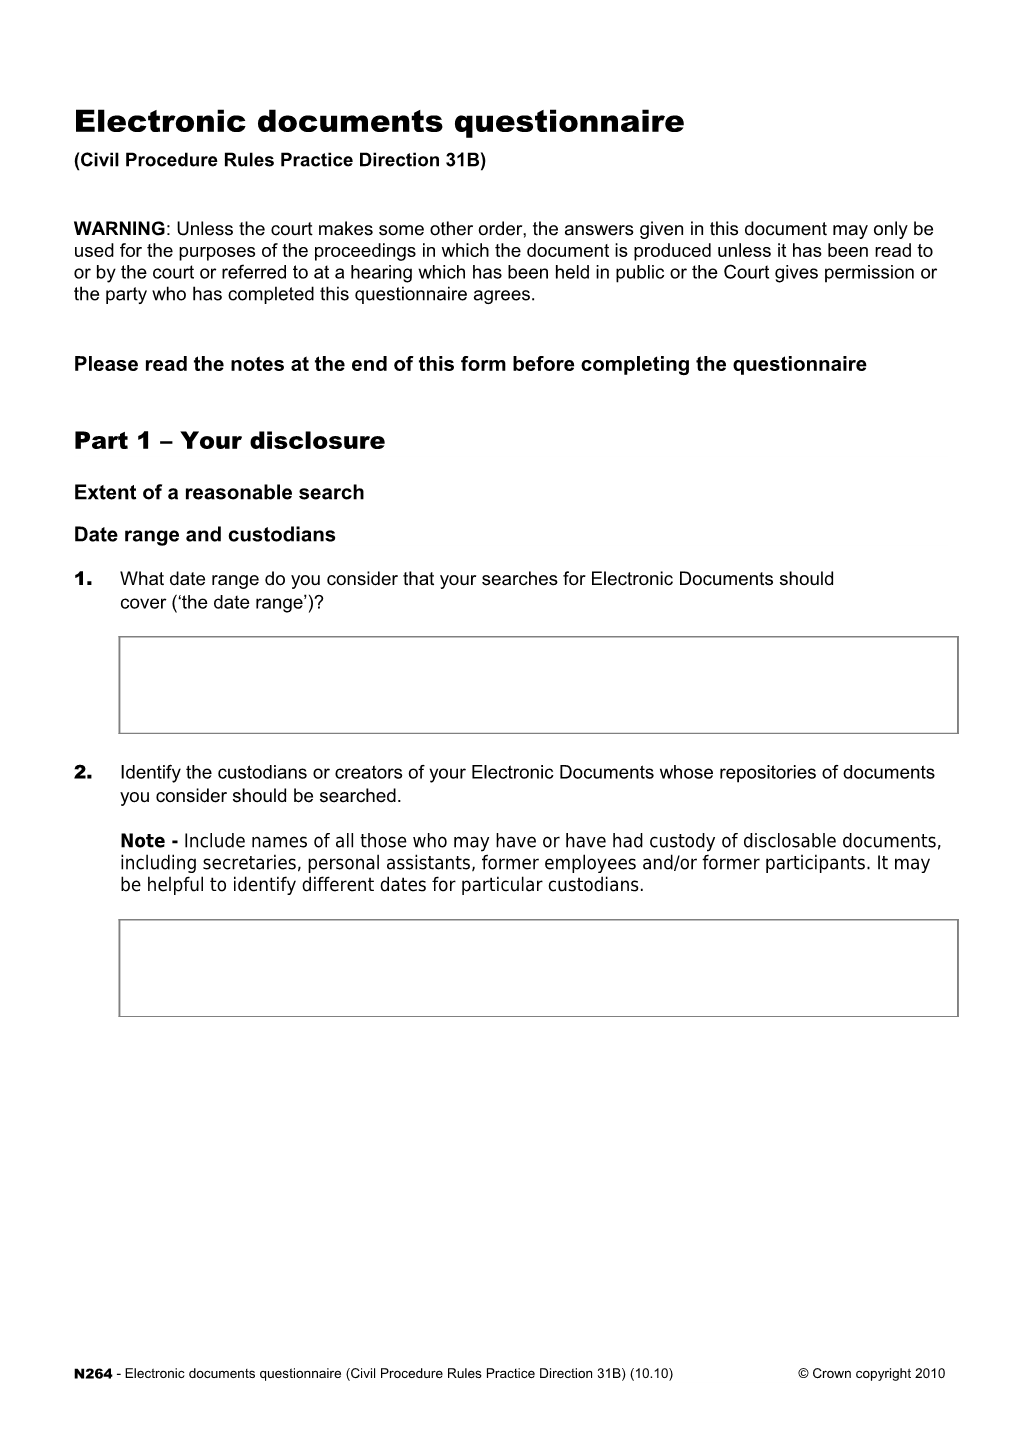 Electronic Documents Questionnaire